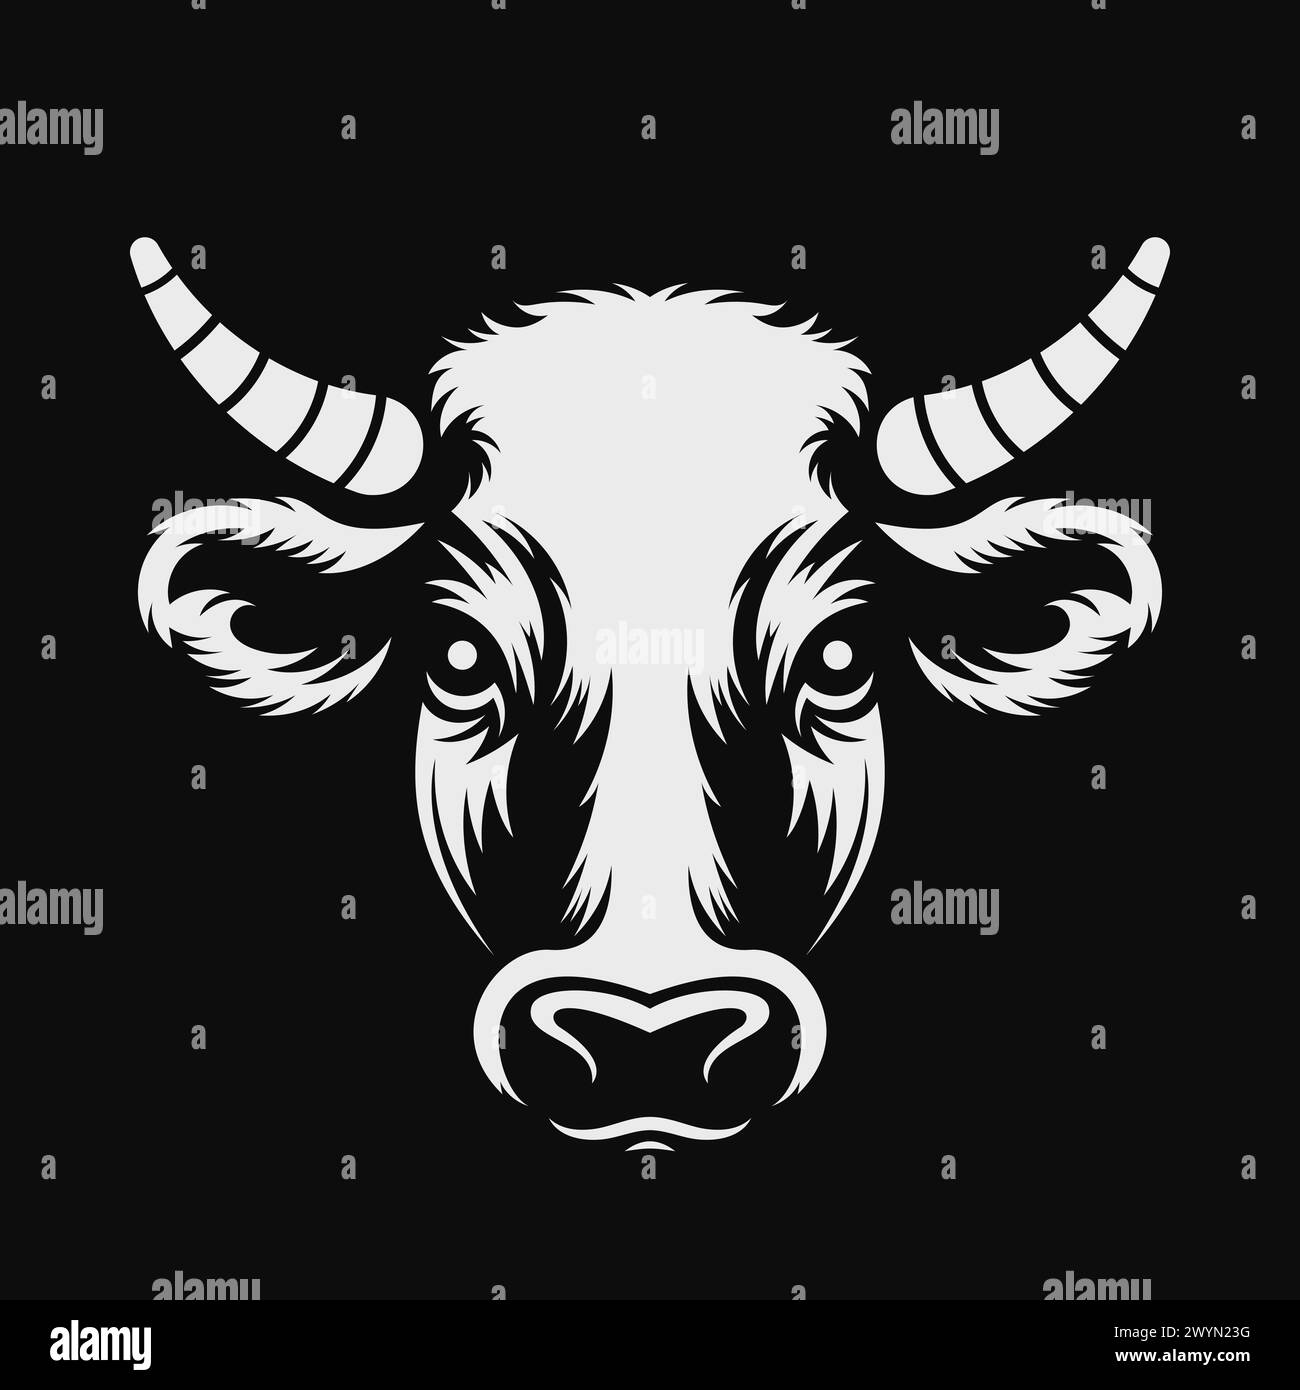 Cow head logo. Black and white emblem. Vector illustration EPS10 Stock Vector